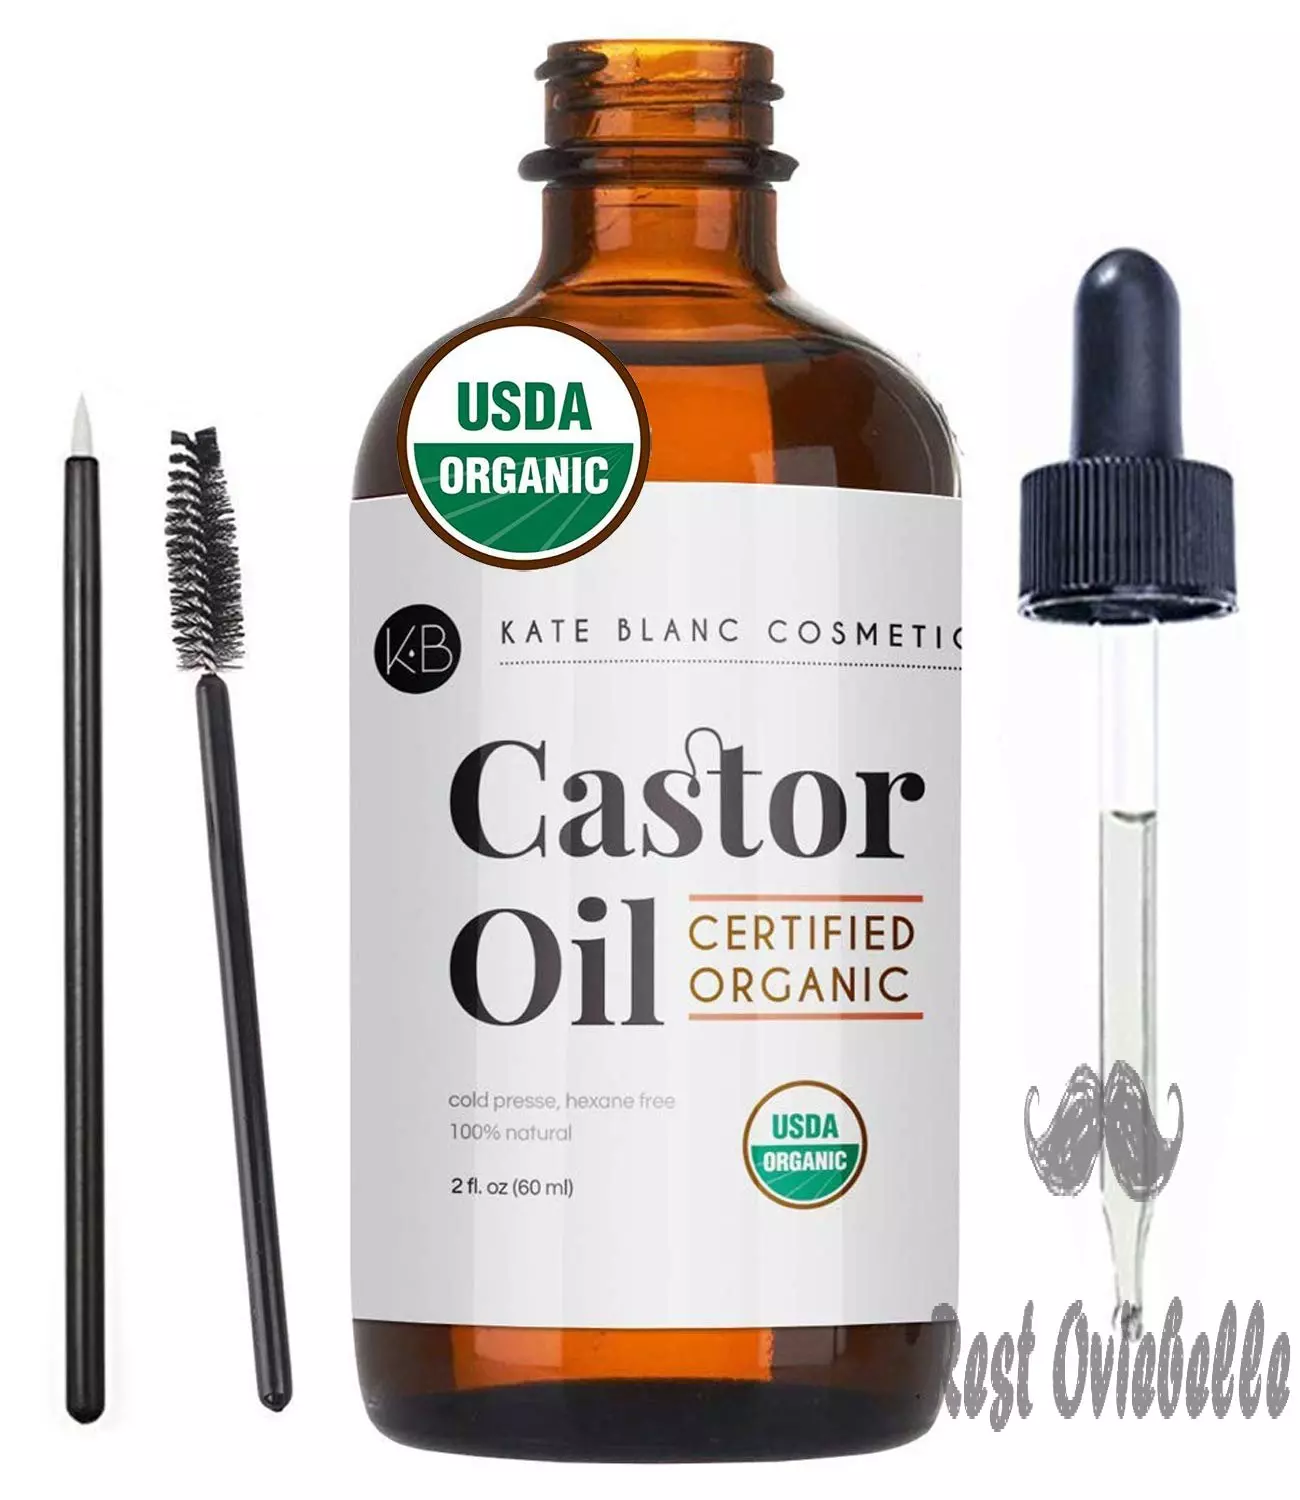 Kate Blanc Cosmetics Certified Organic Castor Oil